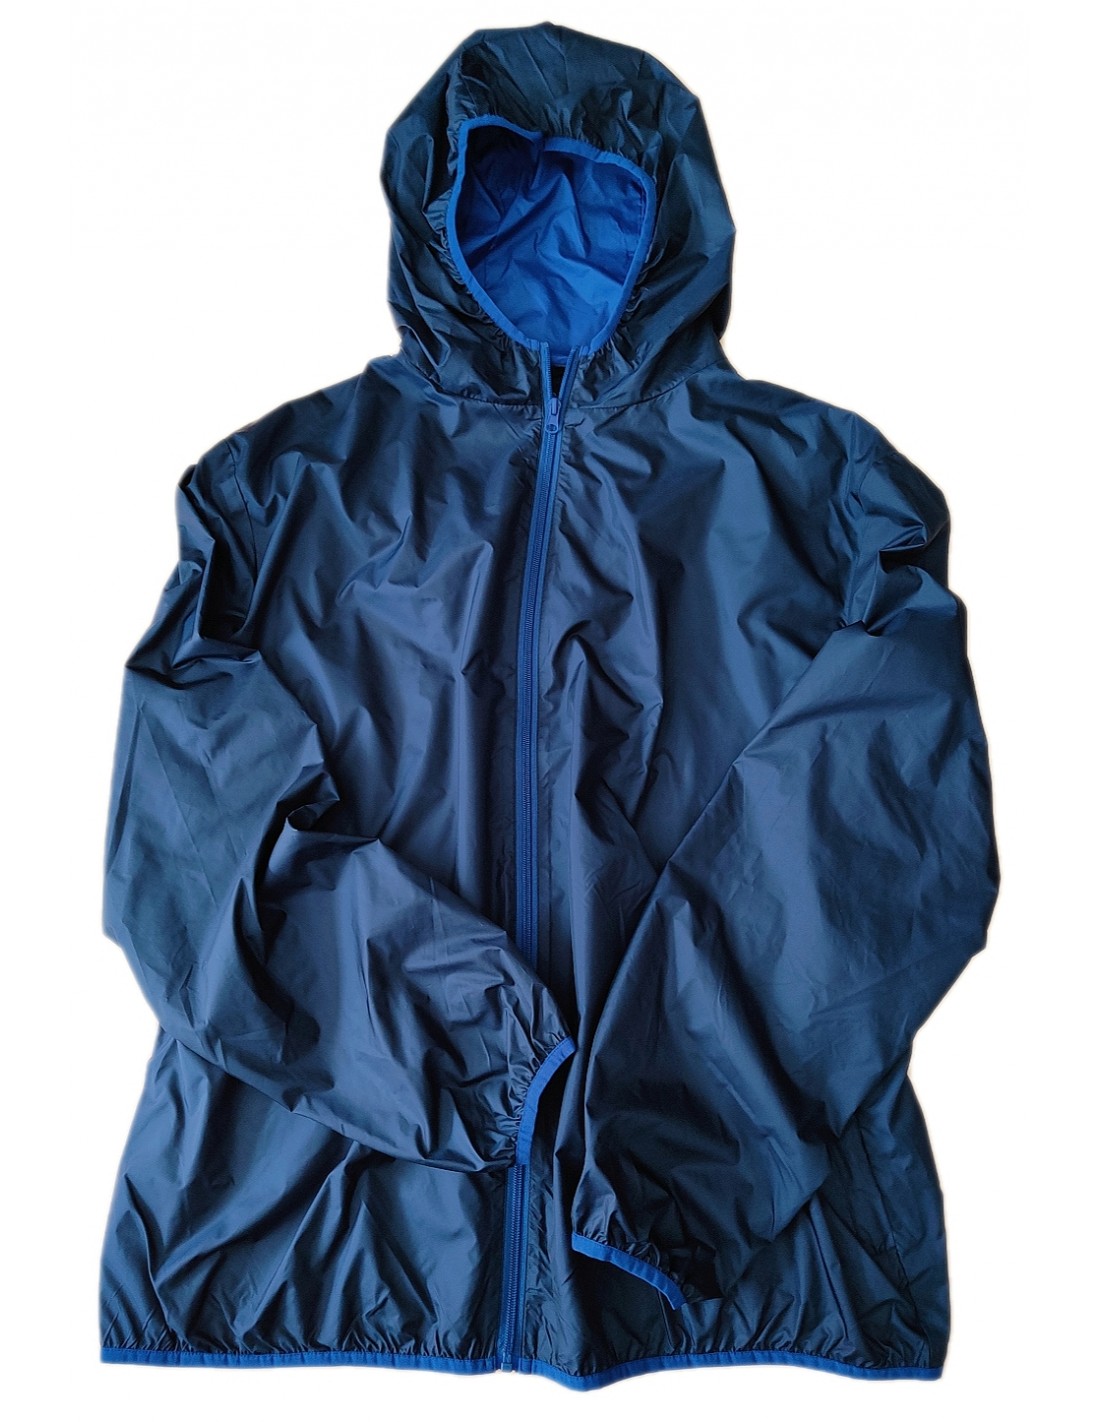 Kway giacca impermeabile uomo taglie forti Maxfort art. e2080 blu